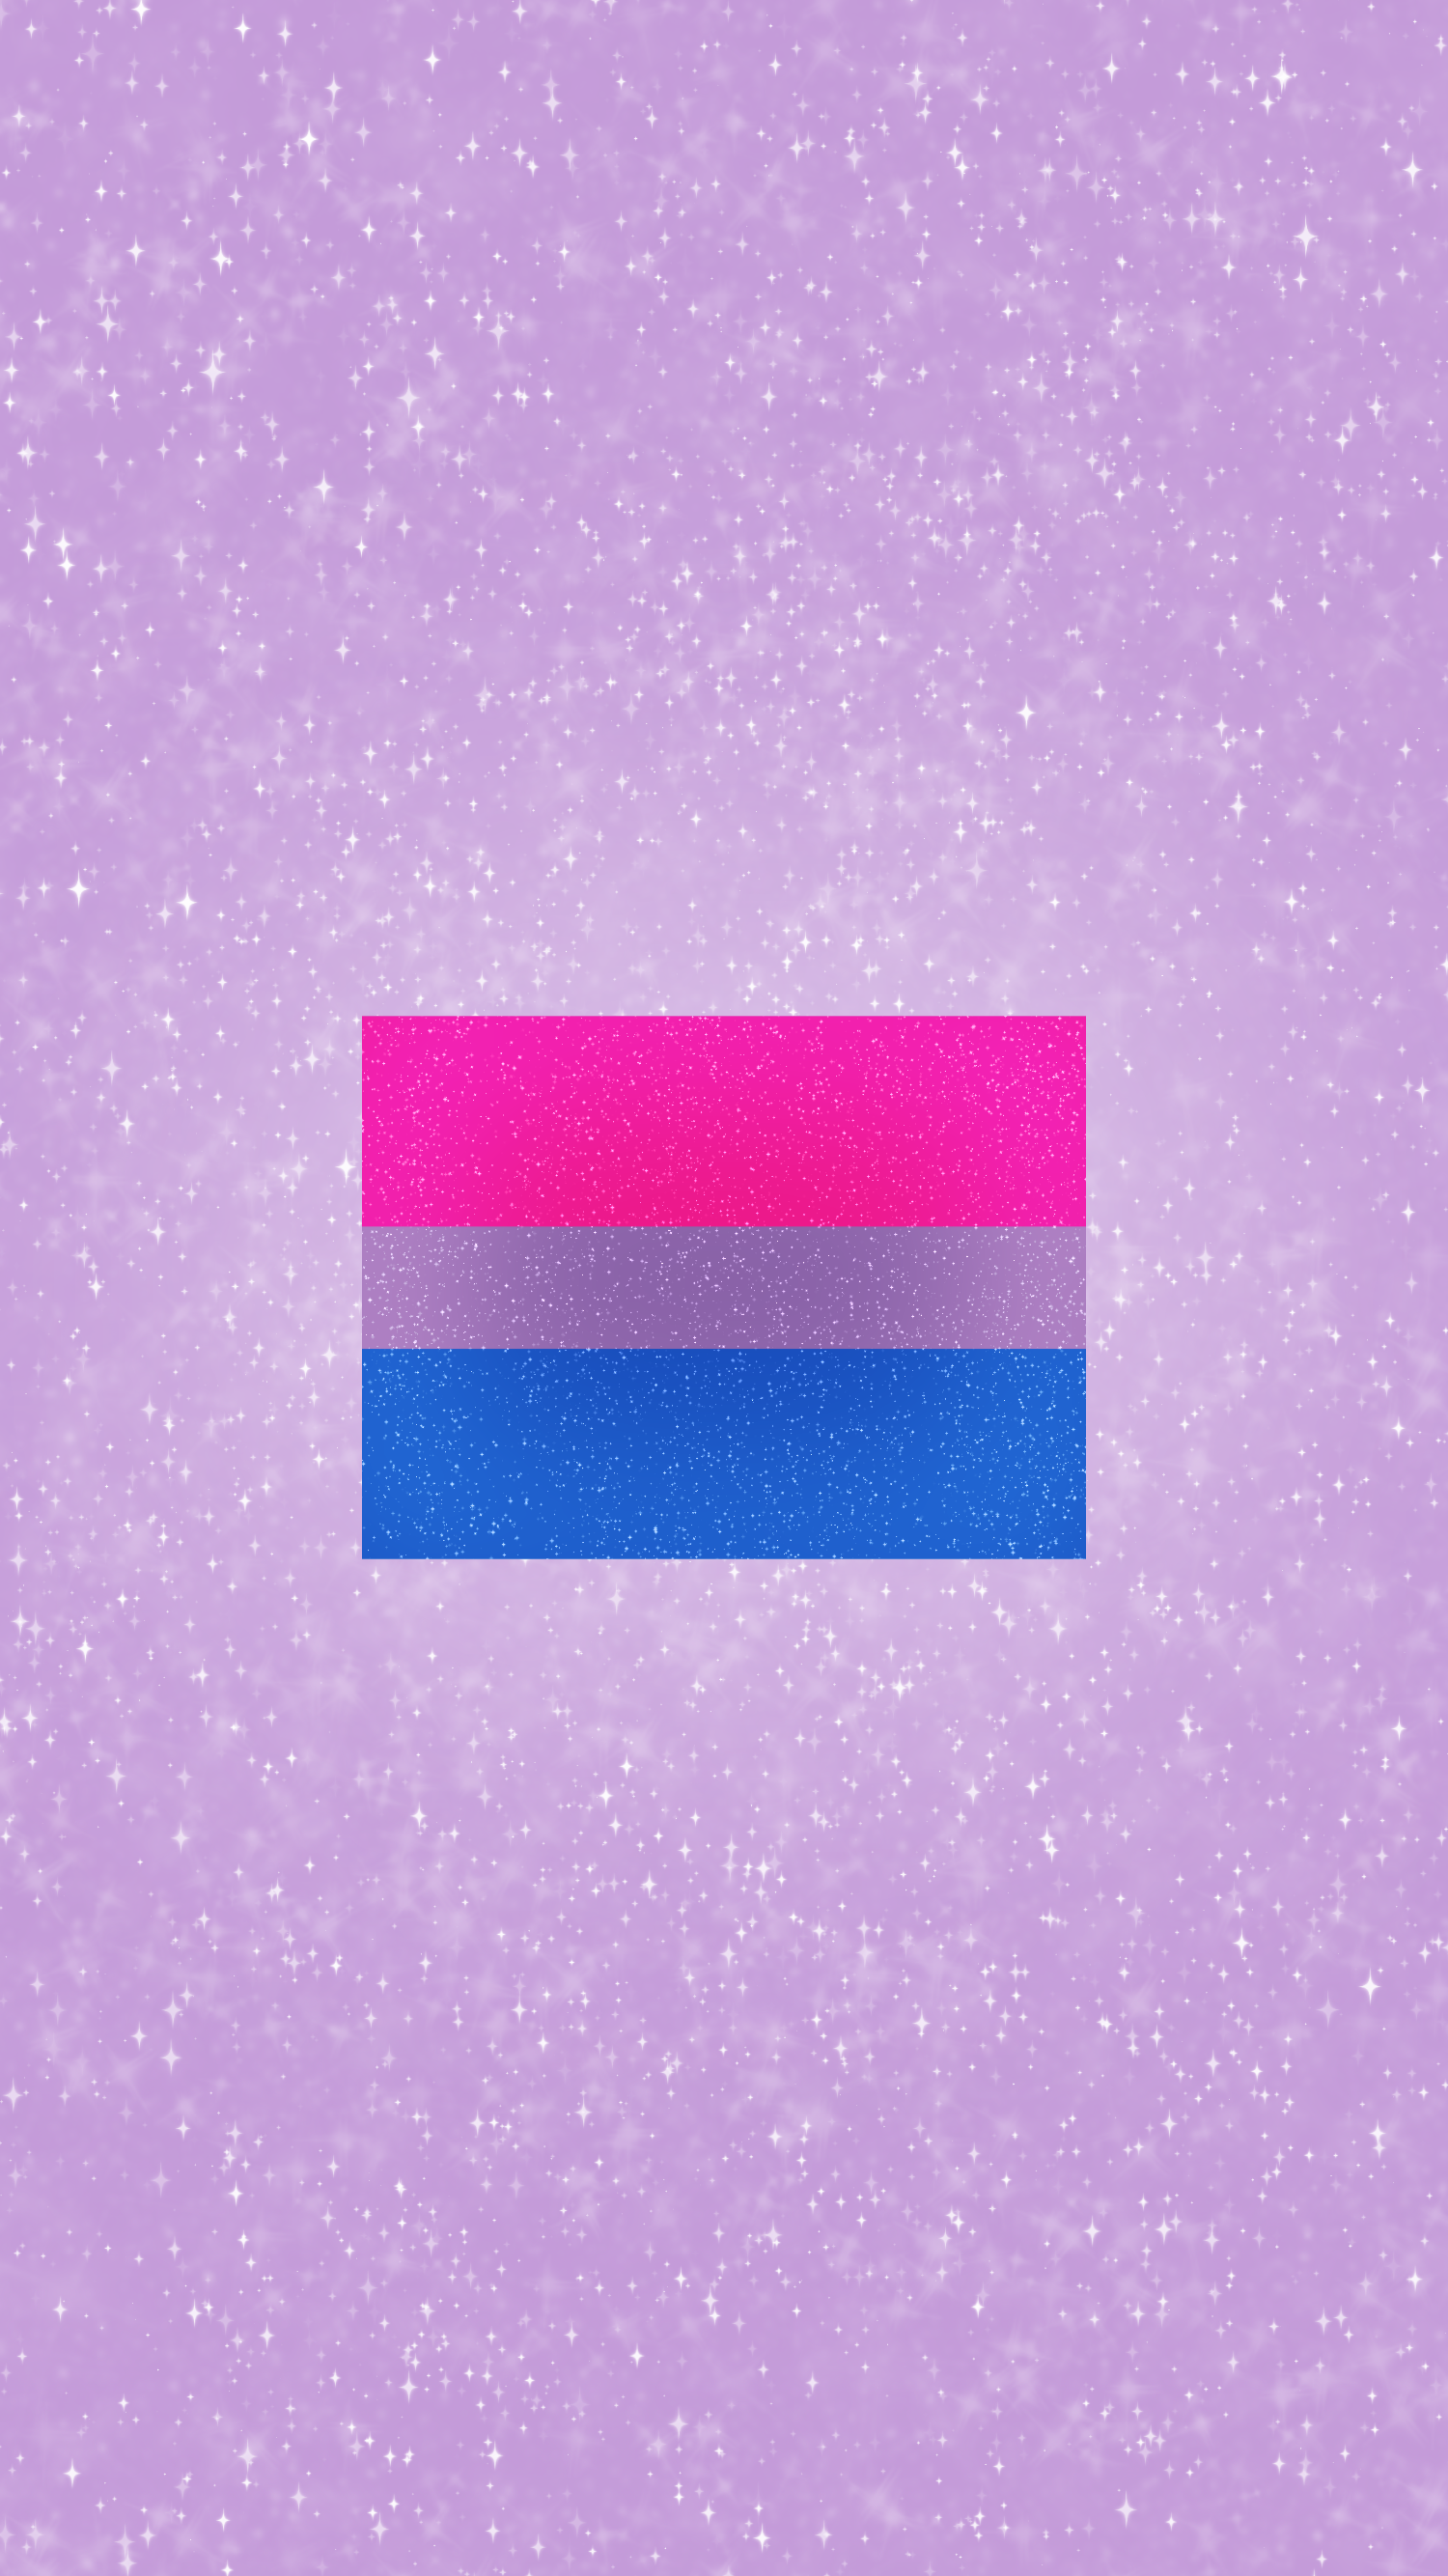 LGBTQ+ Sparkly Wallpaper